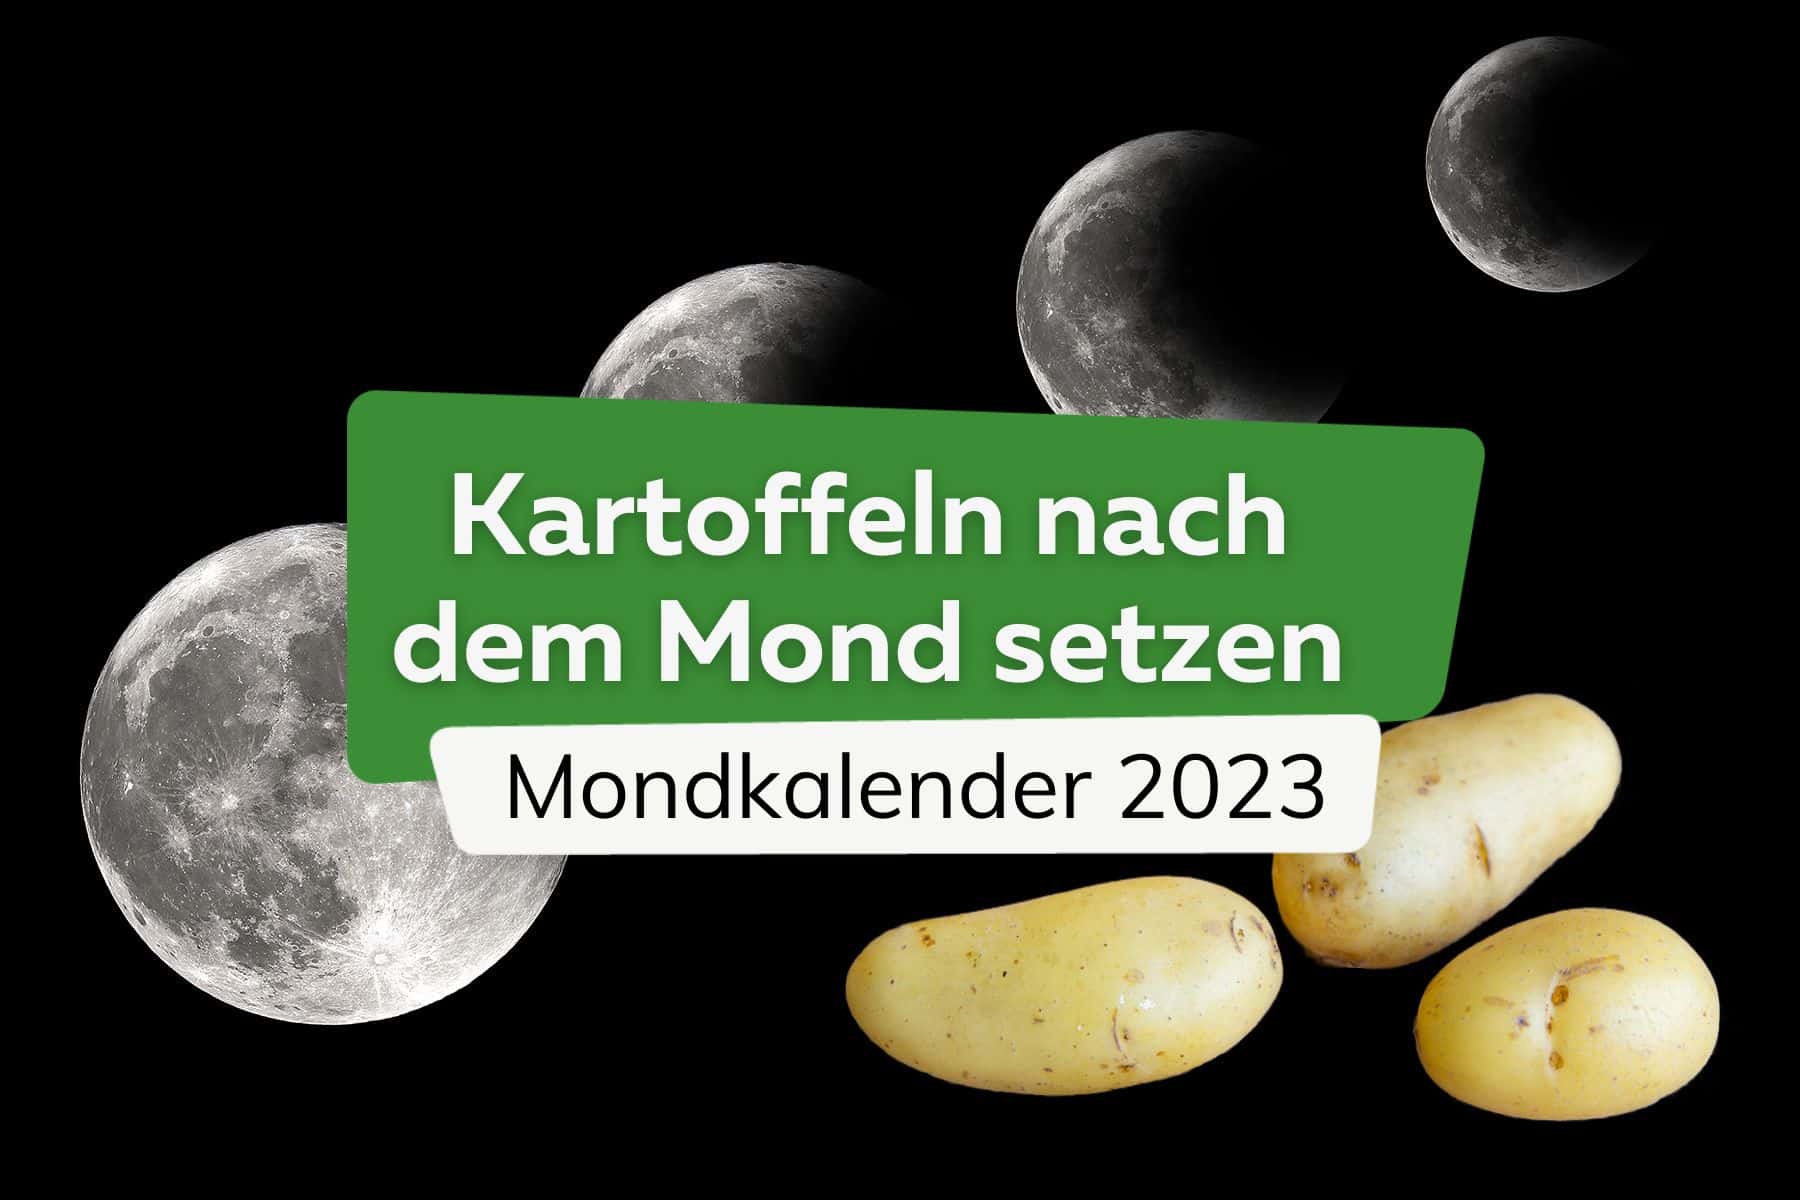 Mondkalender 2023: Kartoffeln setzen nach dem Mond